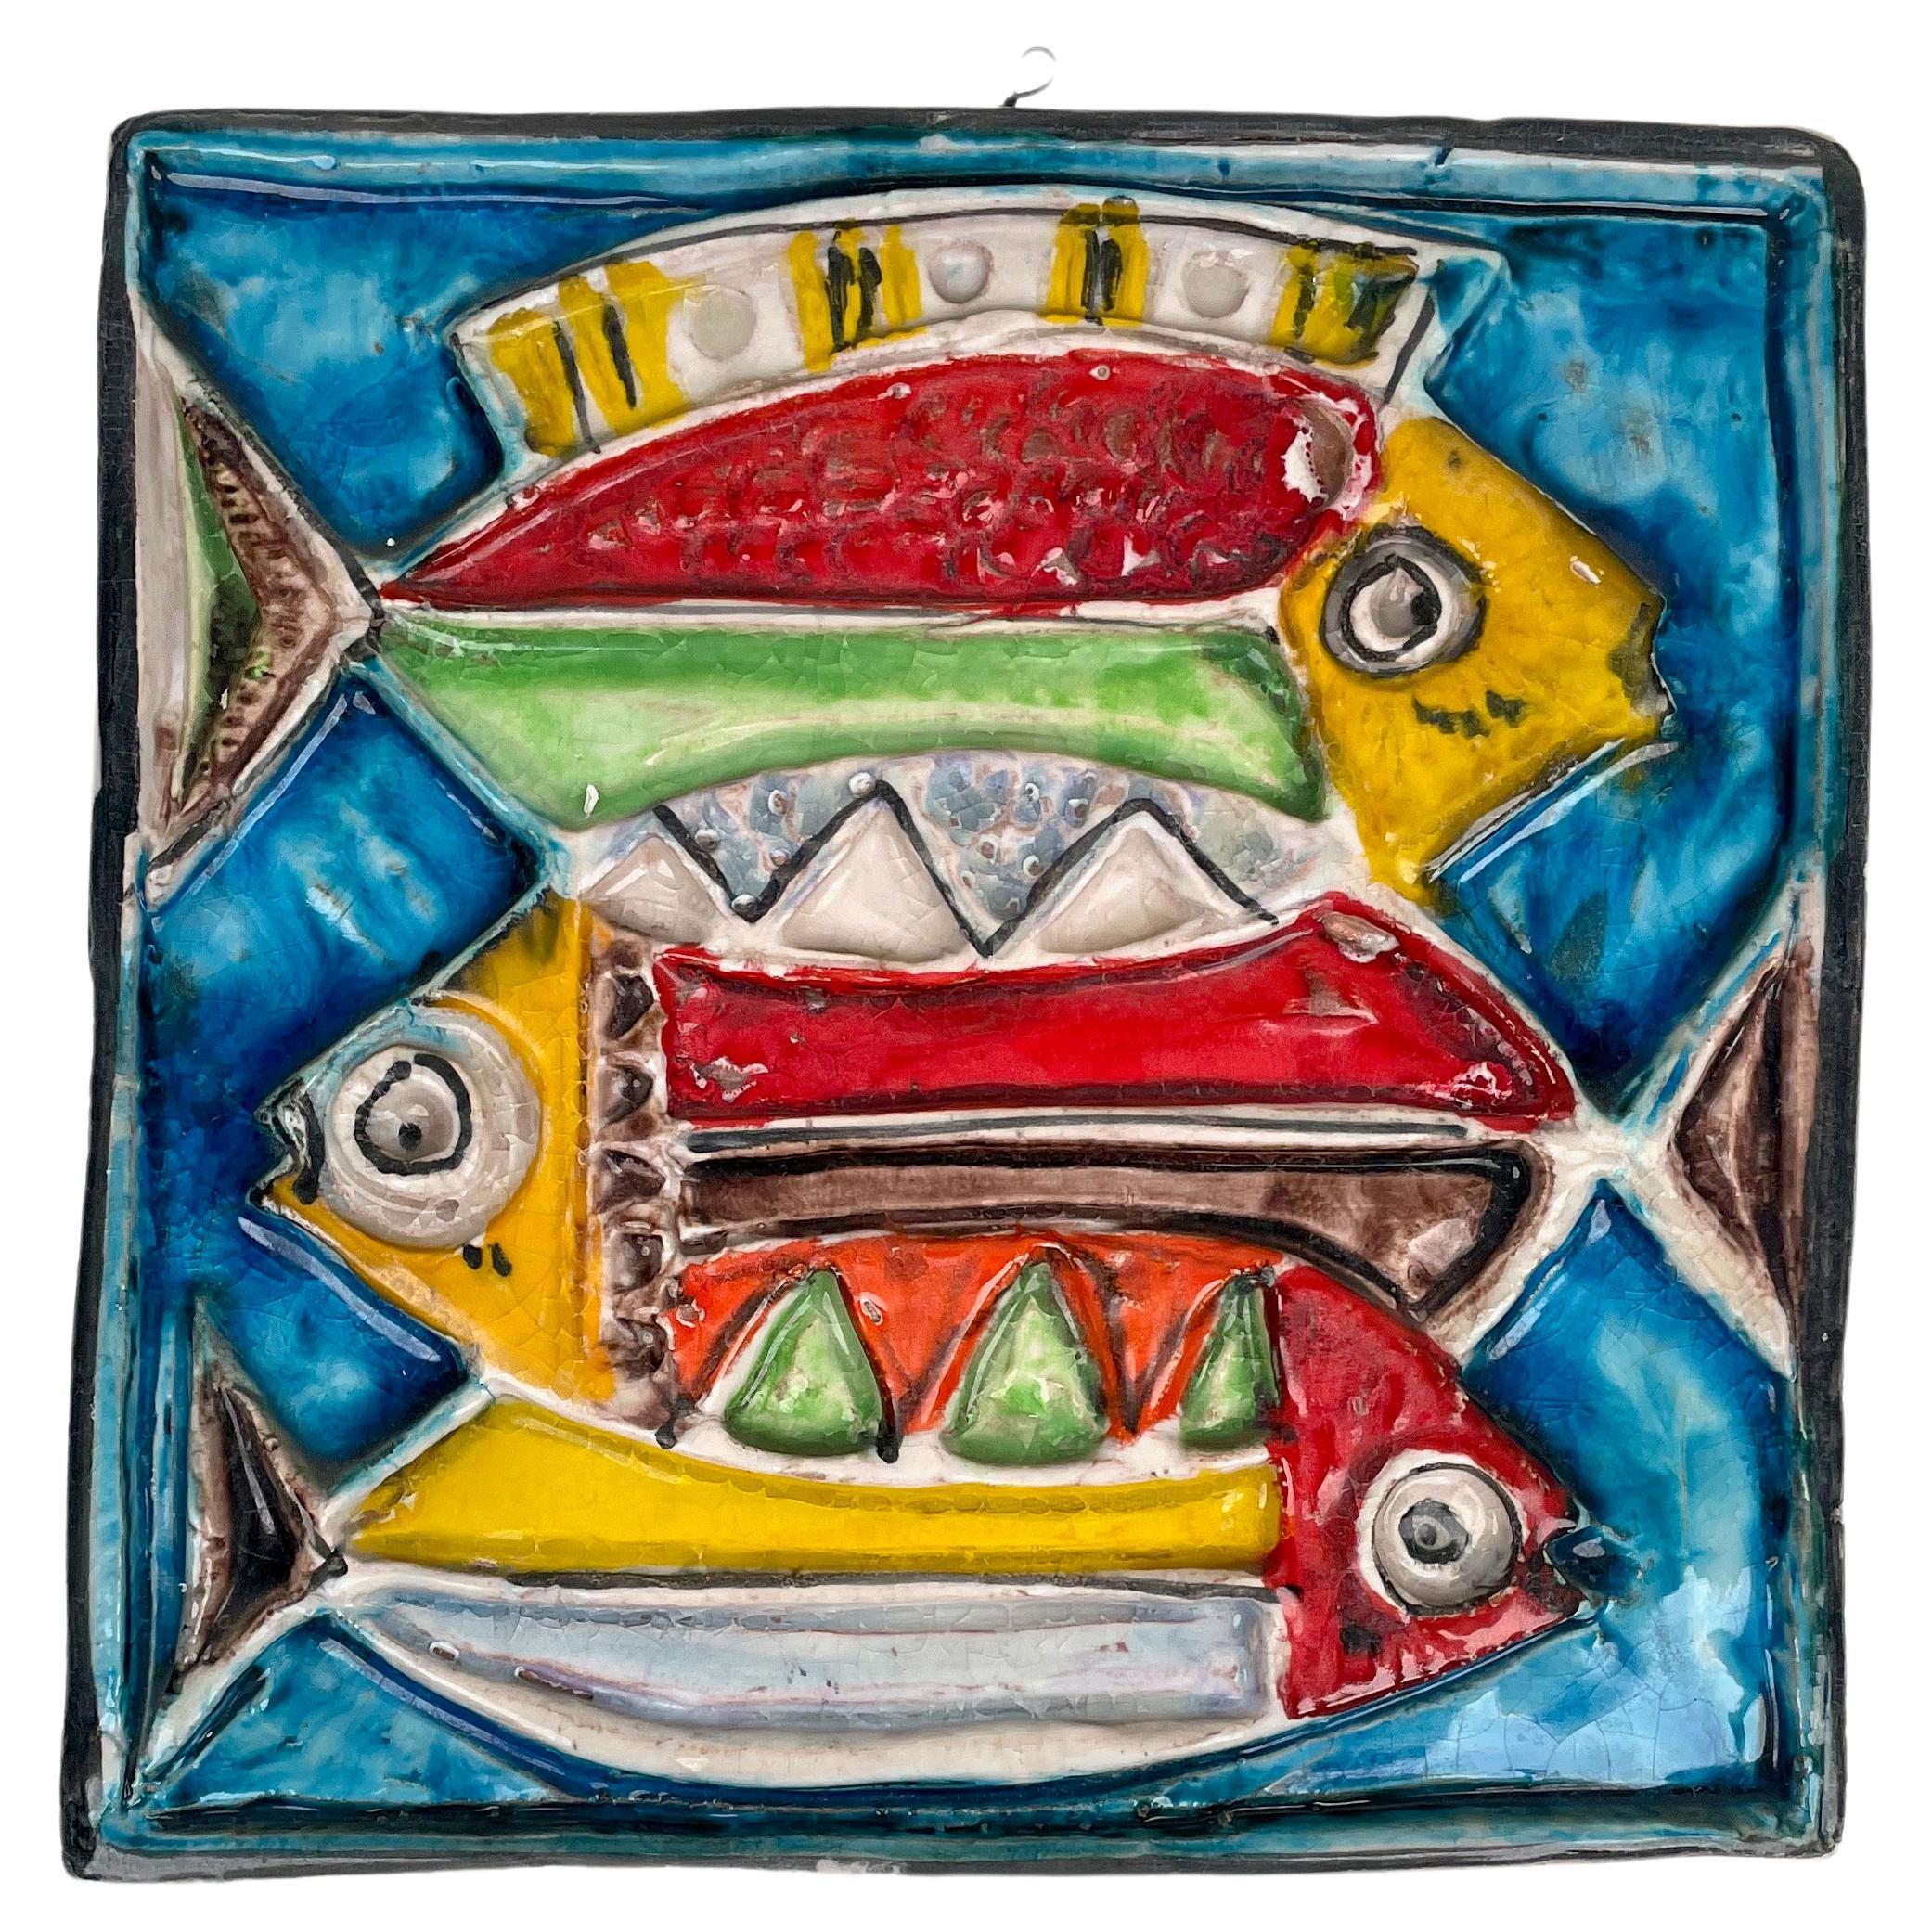 Giovanni de Simone, farbiger Keramik-Fischteller mit quadratischer Kachel, Italien 1960er Jahre